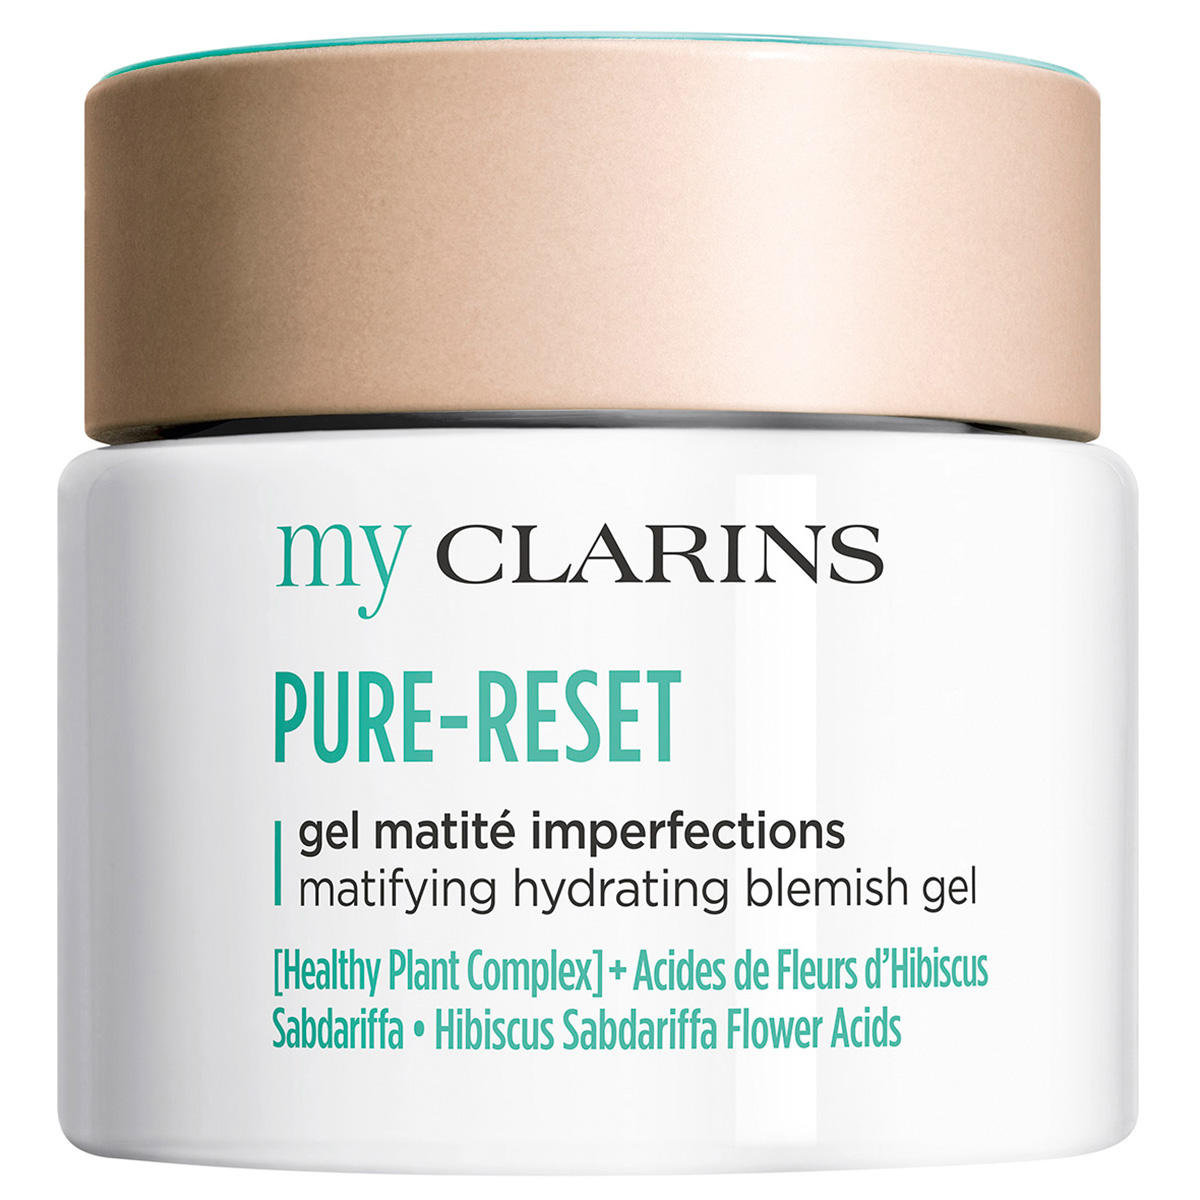 CLARINS myCLARINS My Clarins Pure-Reset Matifying Hydrating Blemish Gel 50 ml - 1